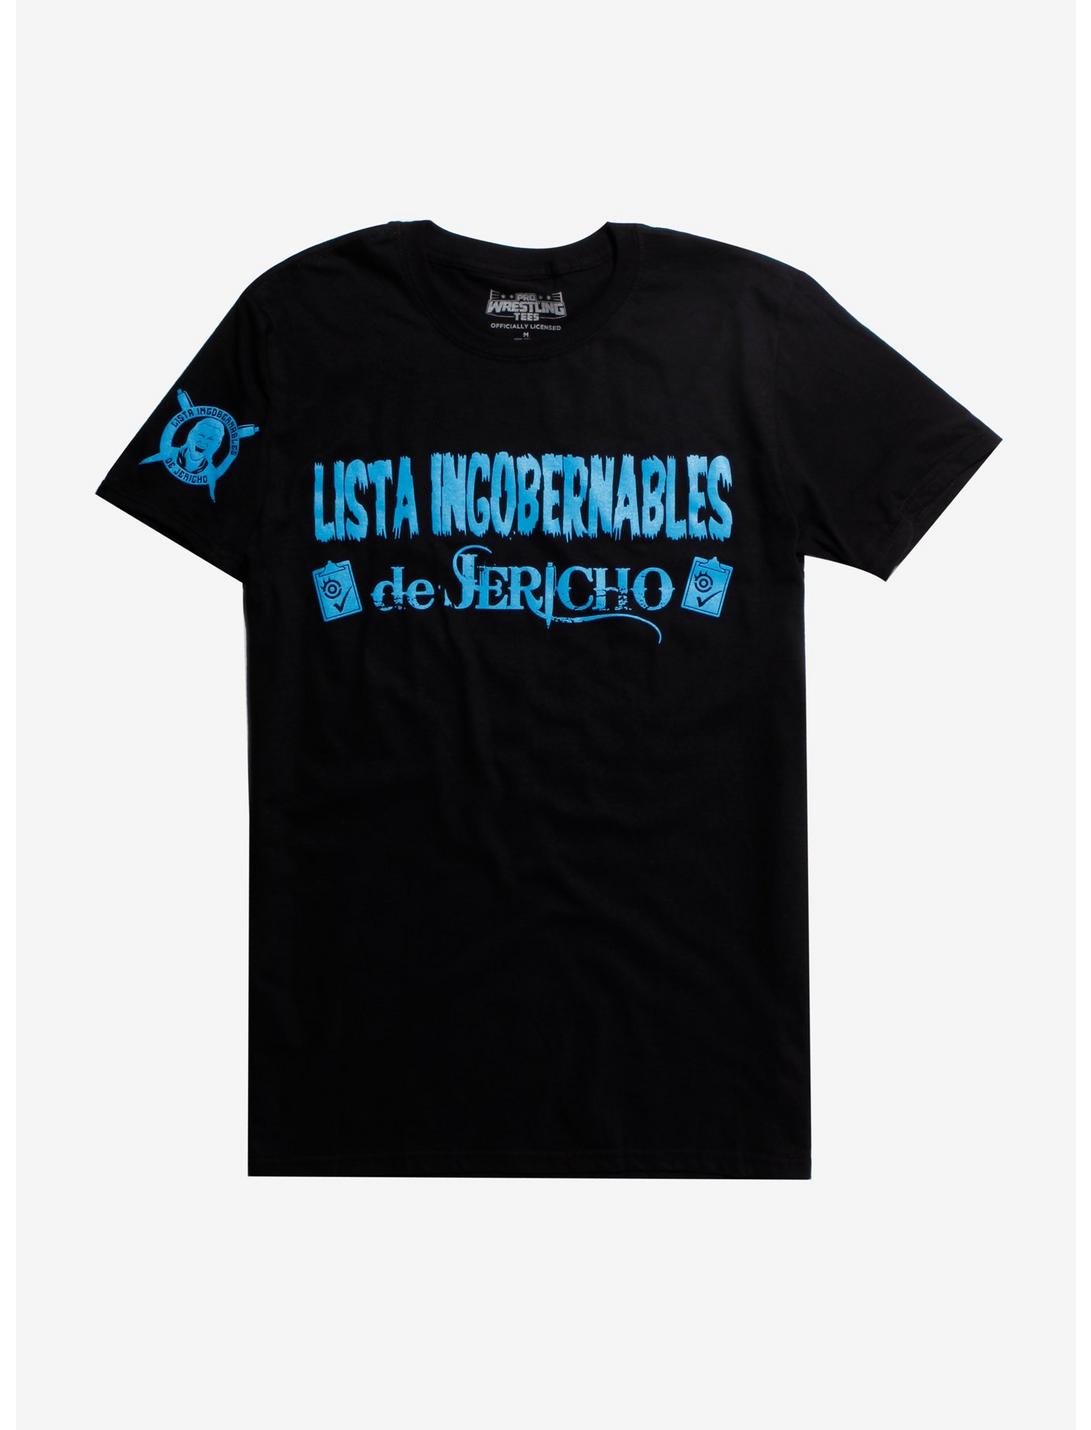 Chris Jericho Lista Ingobernables De Jericho T-Shirt Hot Topic Exclusive, BLACK, hi-res